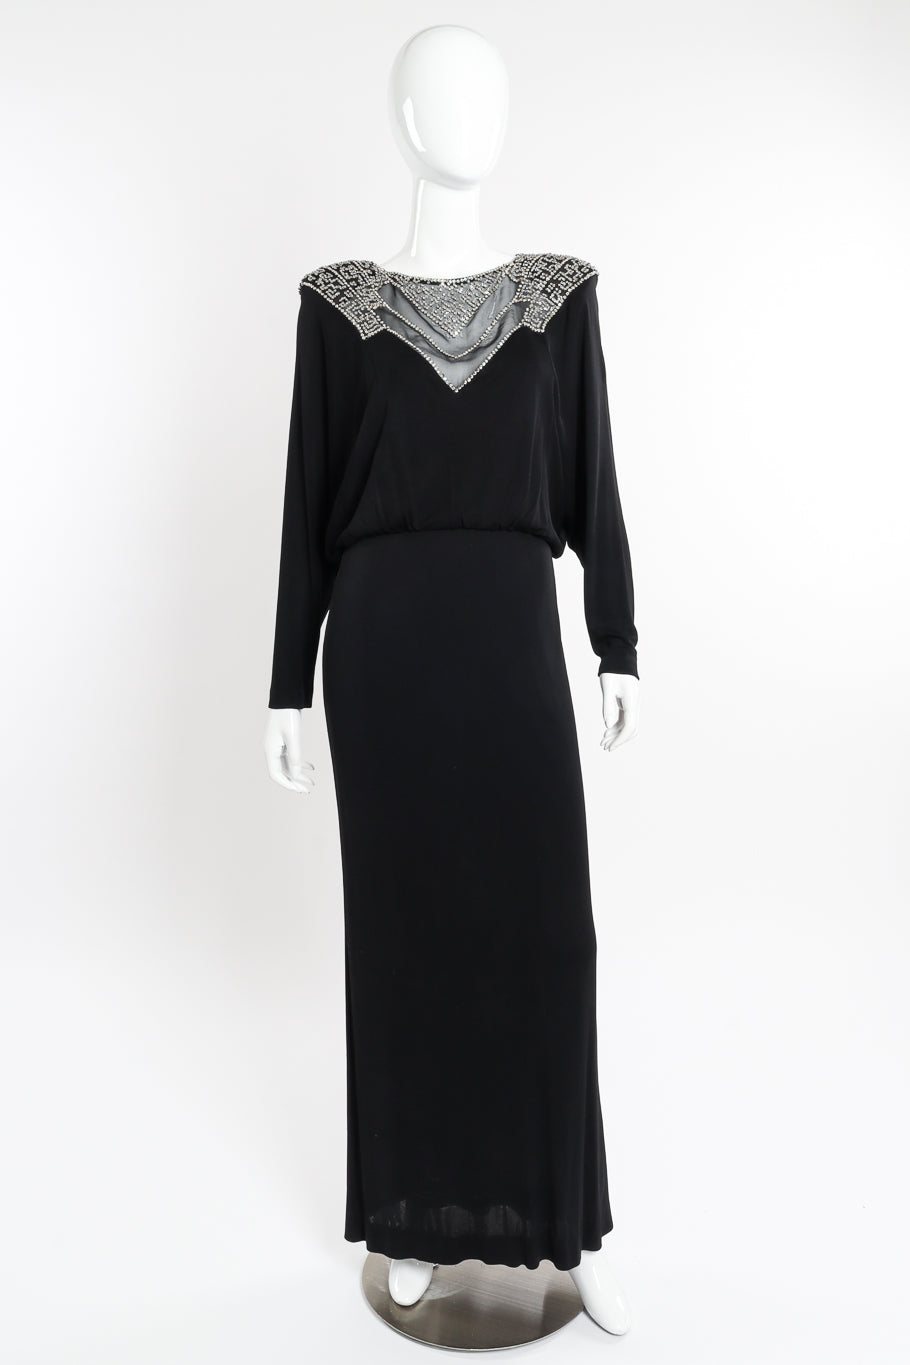 Beaded Blouson Dolman Dress by Victoria Royal on mannequin @recessla